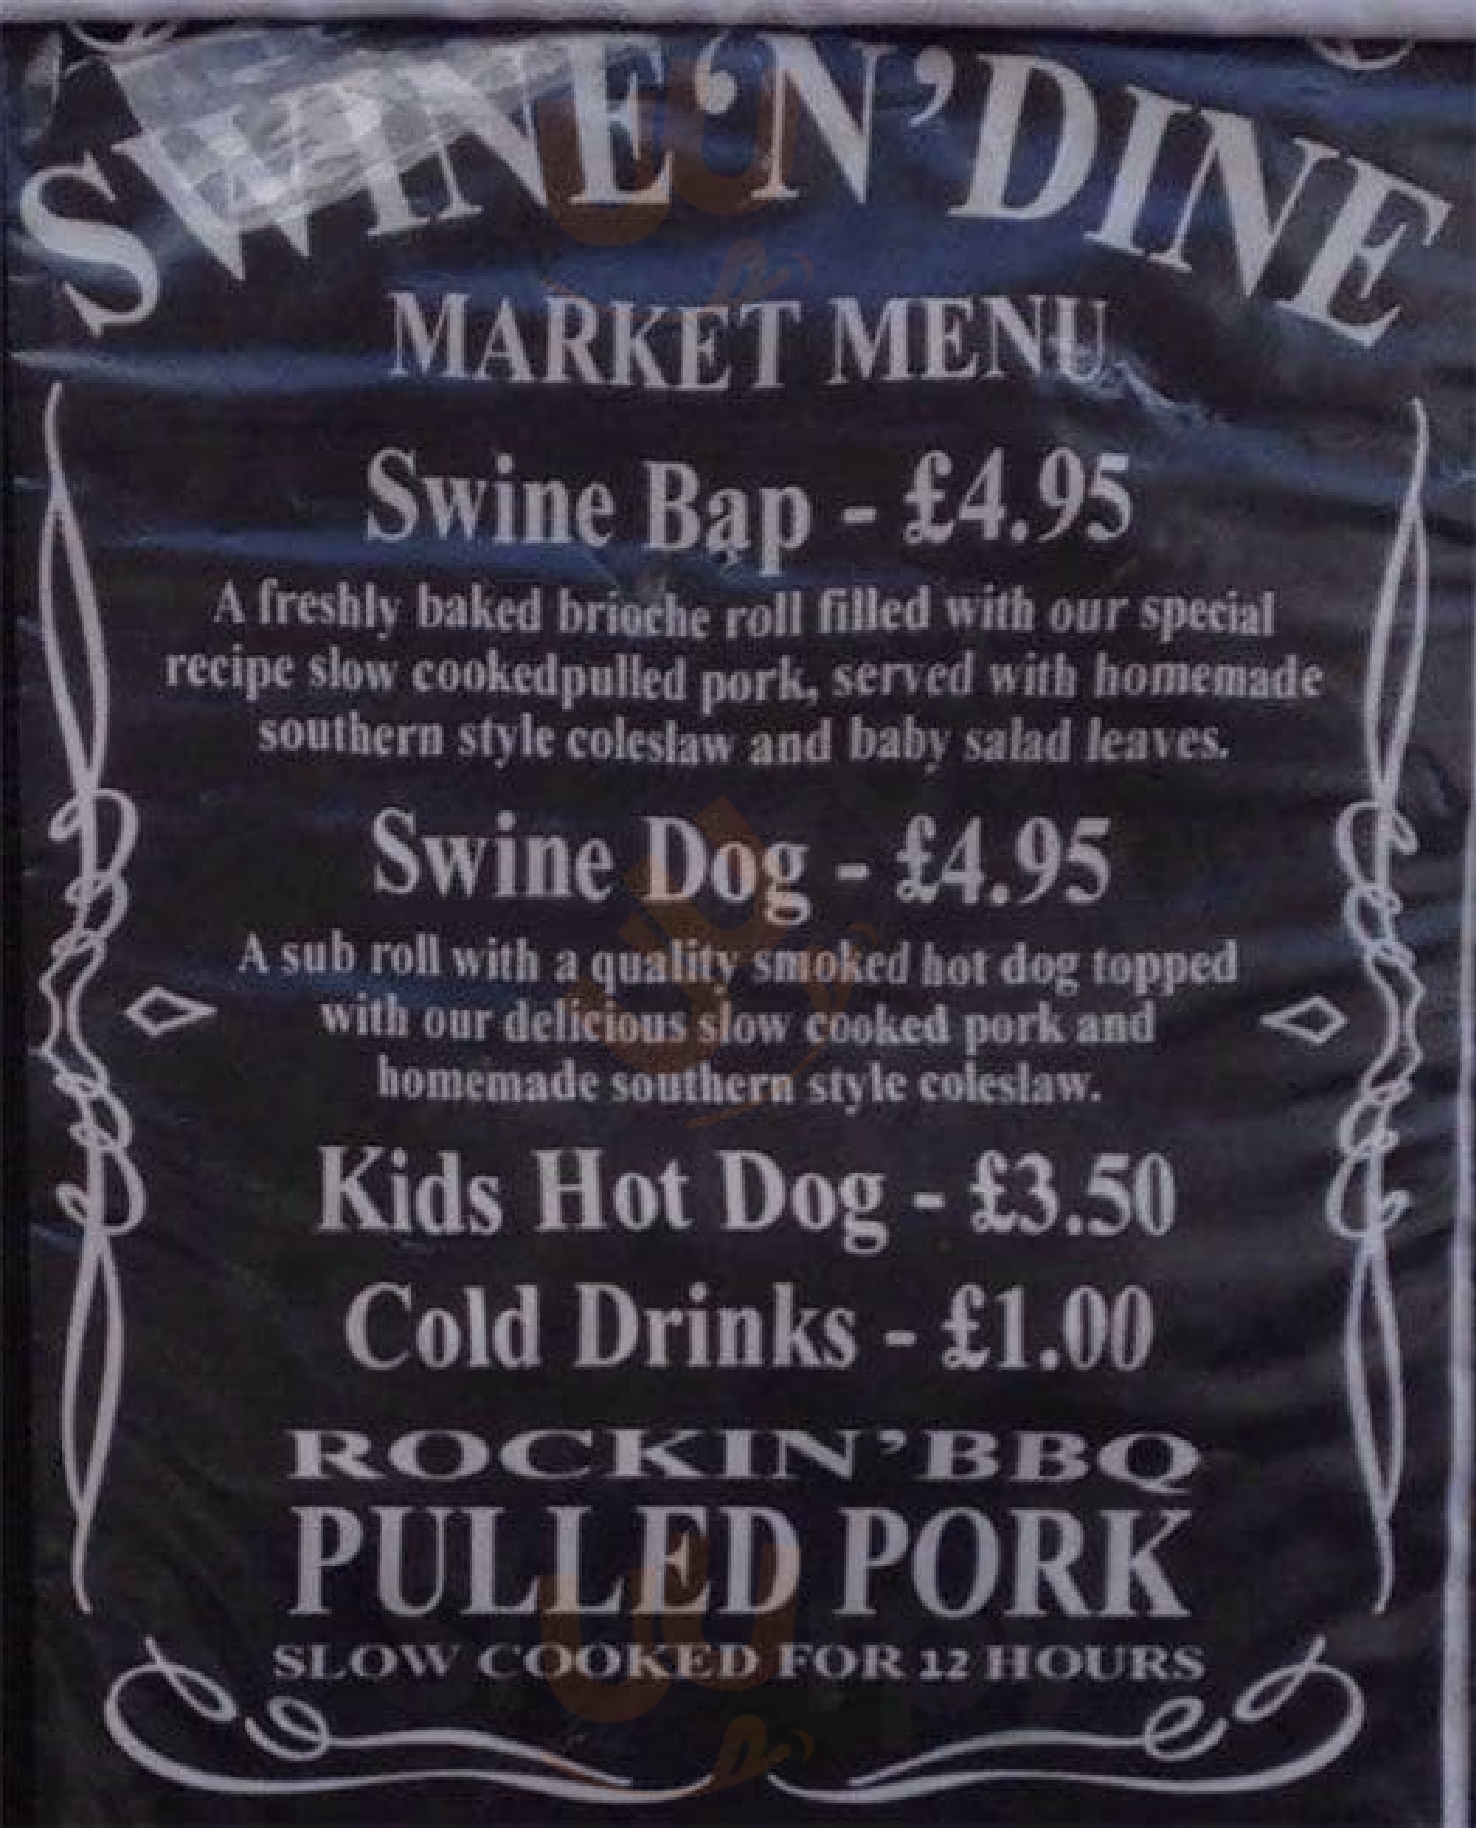 Swine 'n' Dine Kingston upon Thames Menu - 1